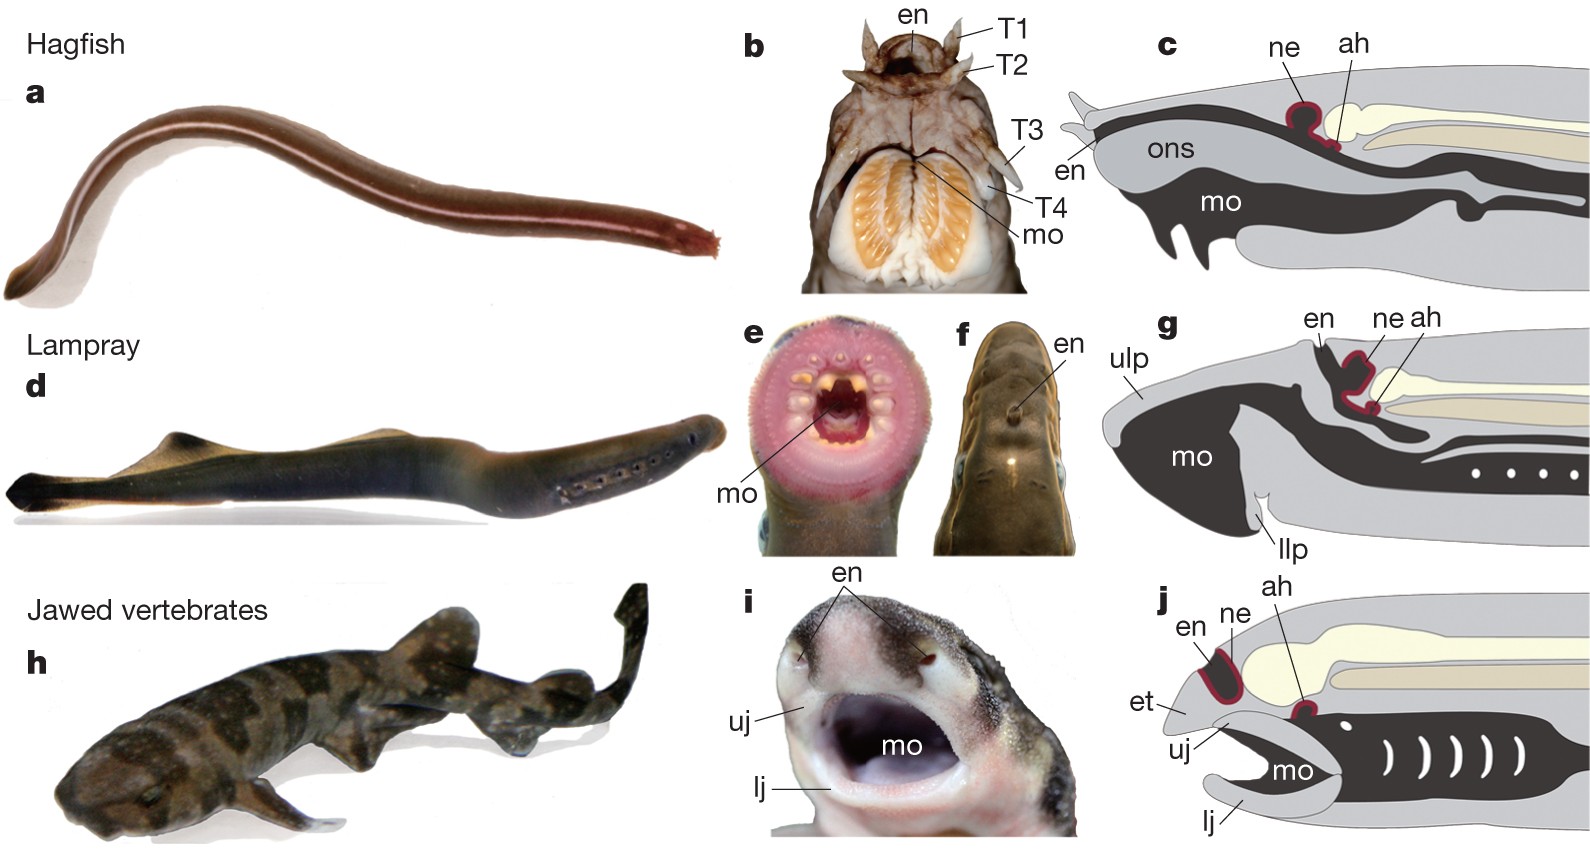 Craniofacial development of hagfishes and the evolution of vertebrates |  Nature